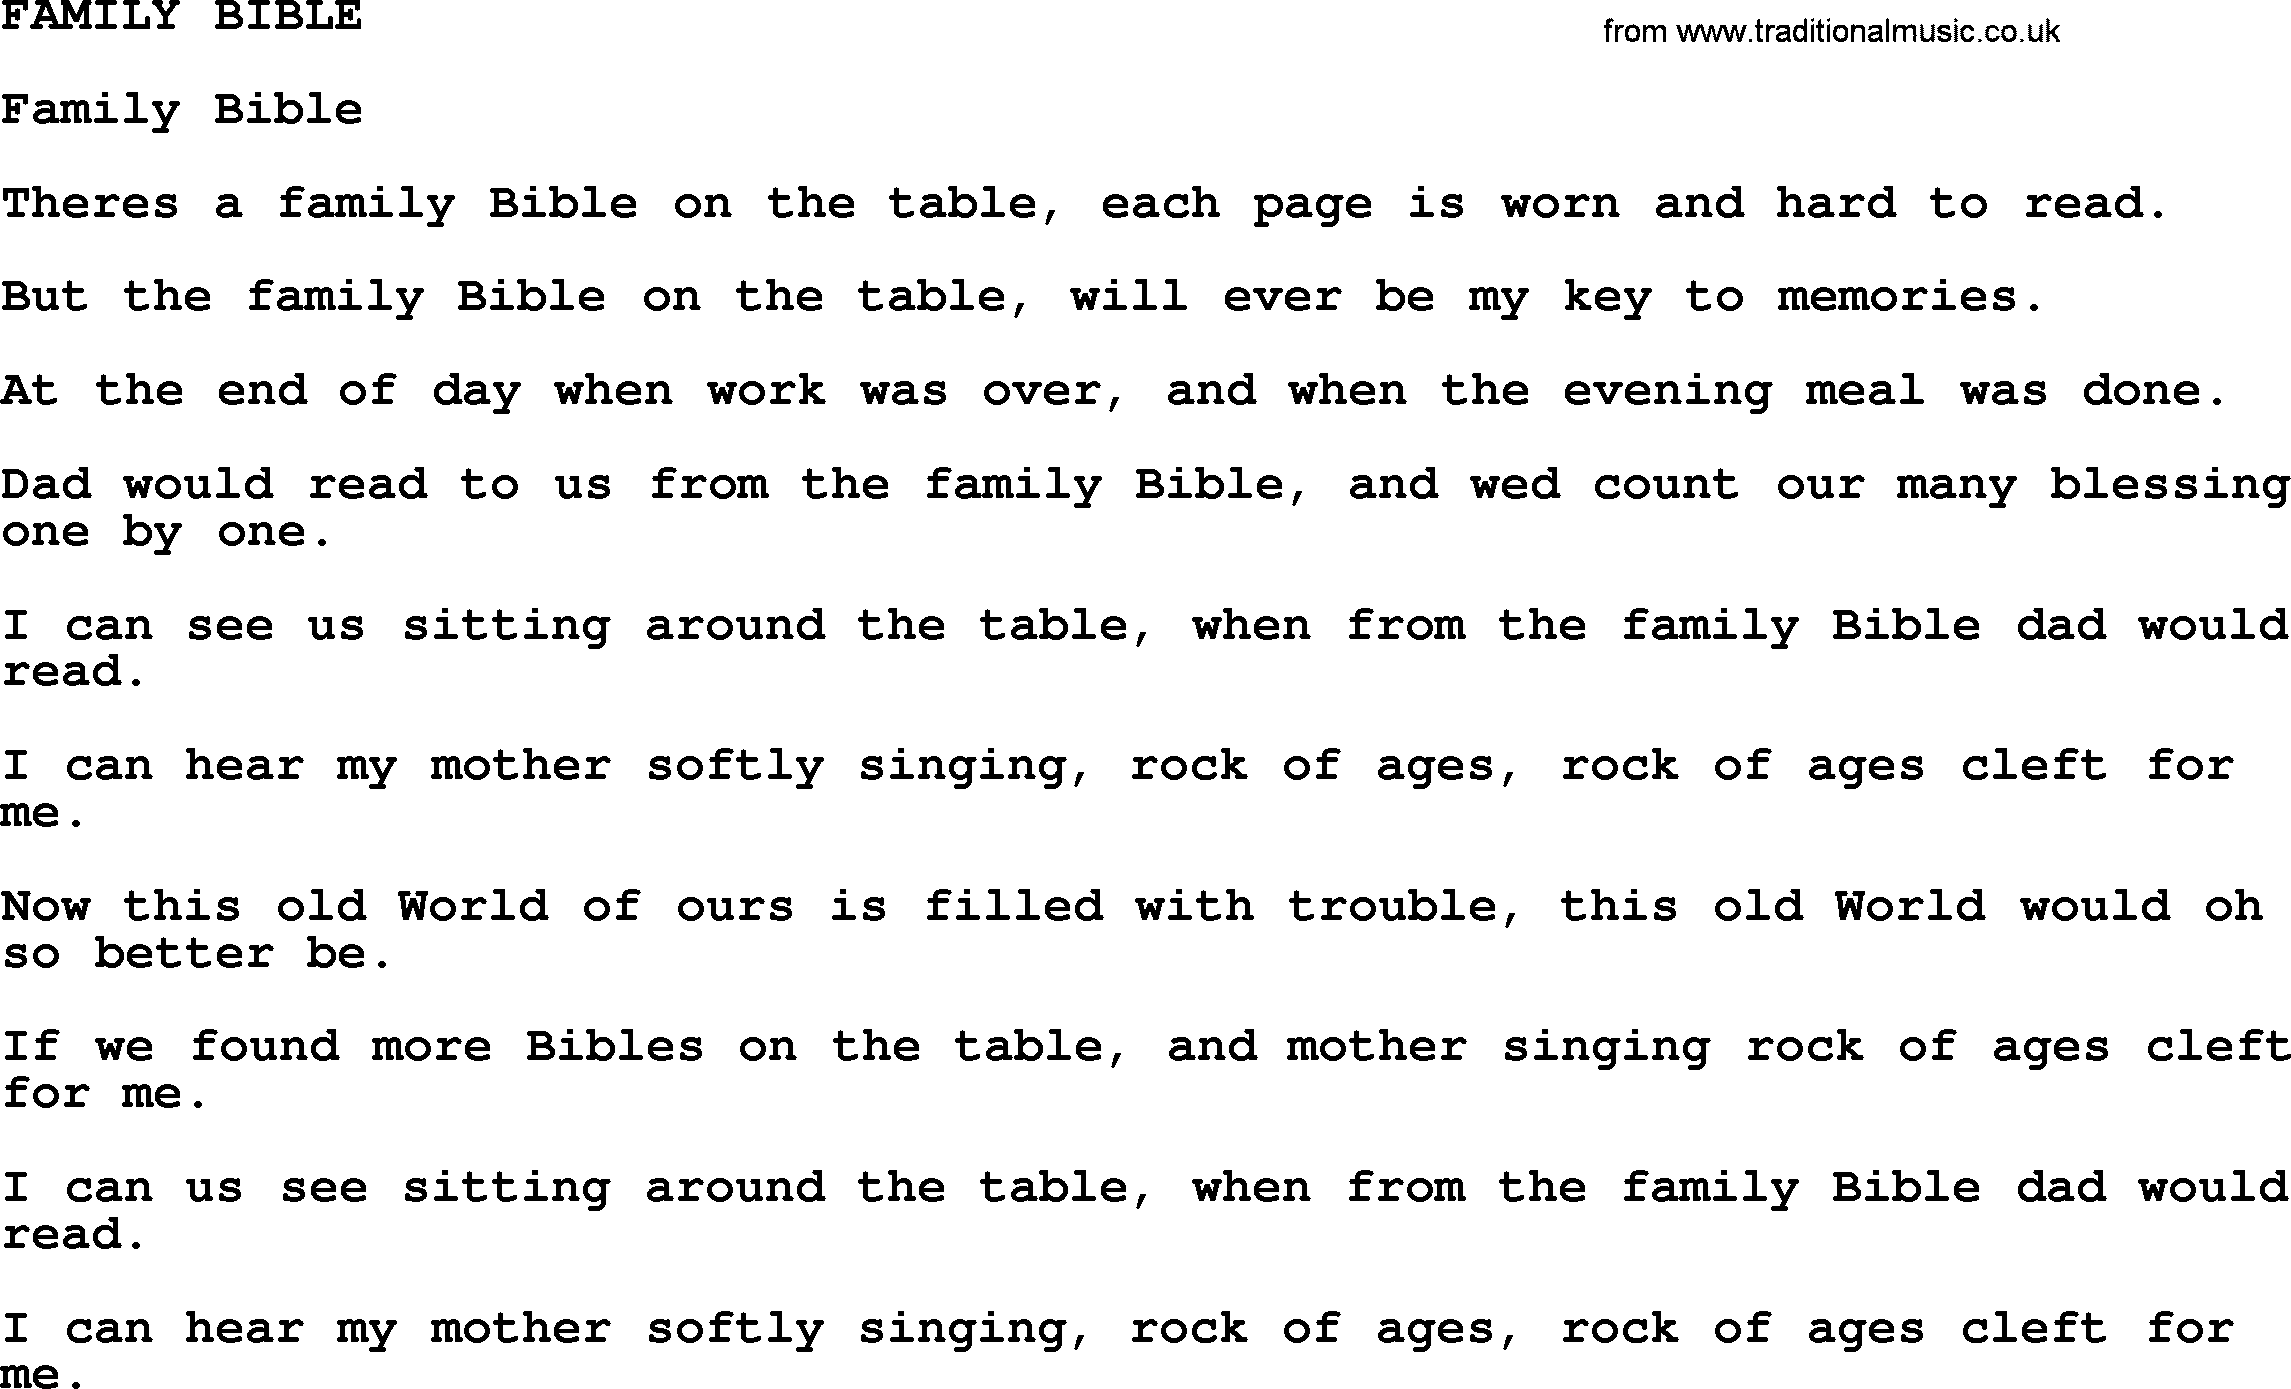 Merle Haggard song: Family Bible, lyrics.